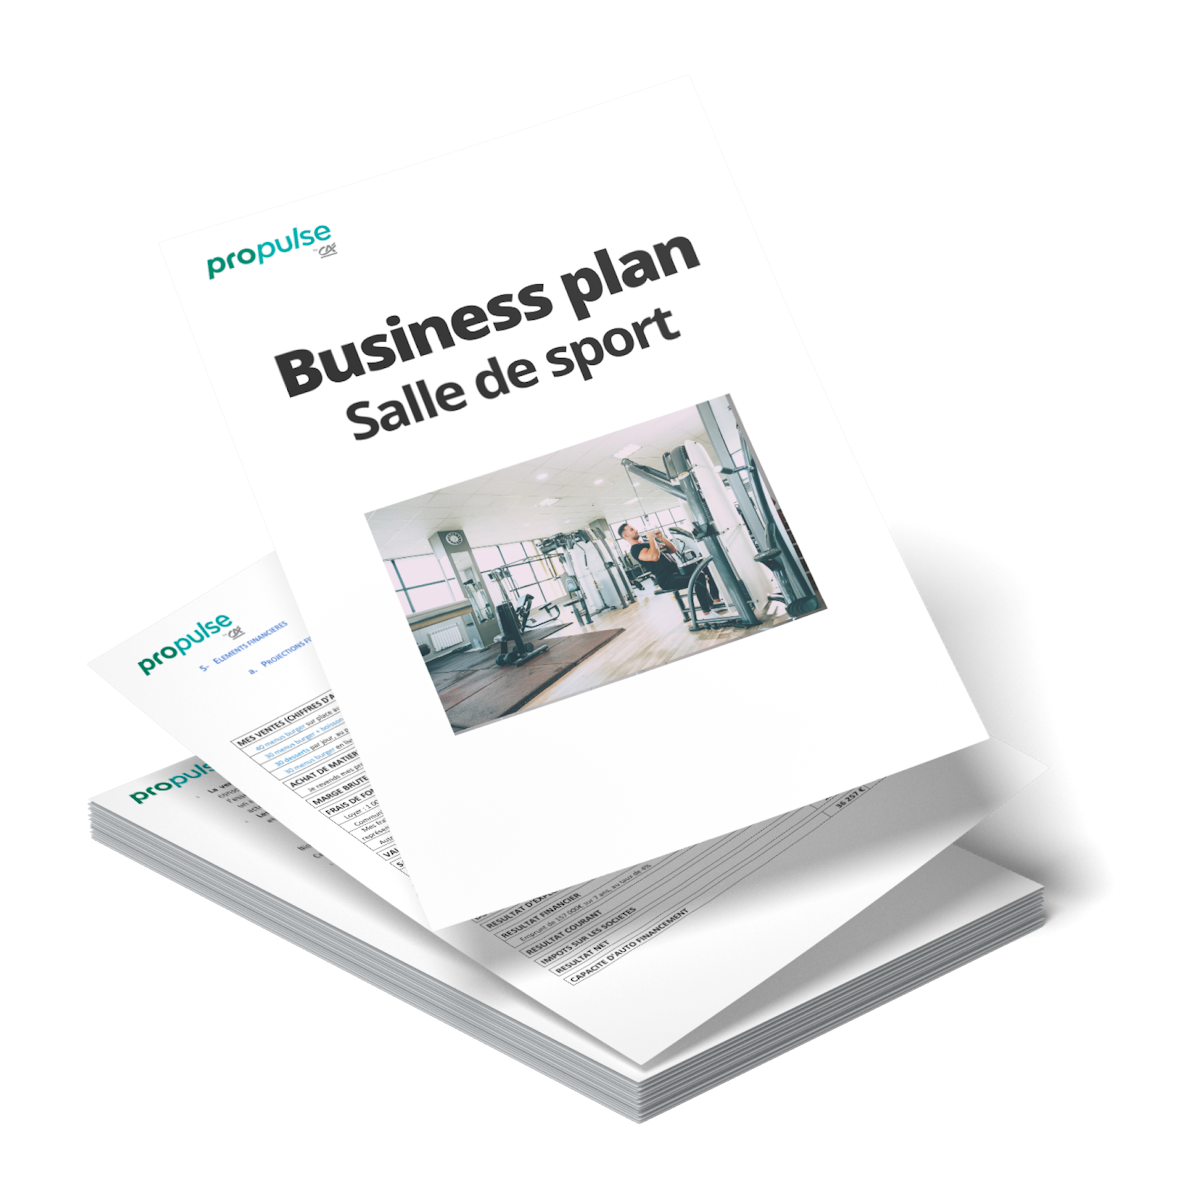 business plan salle de sport maroc pdf